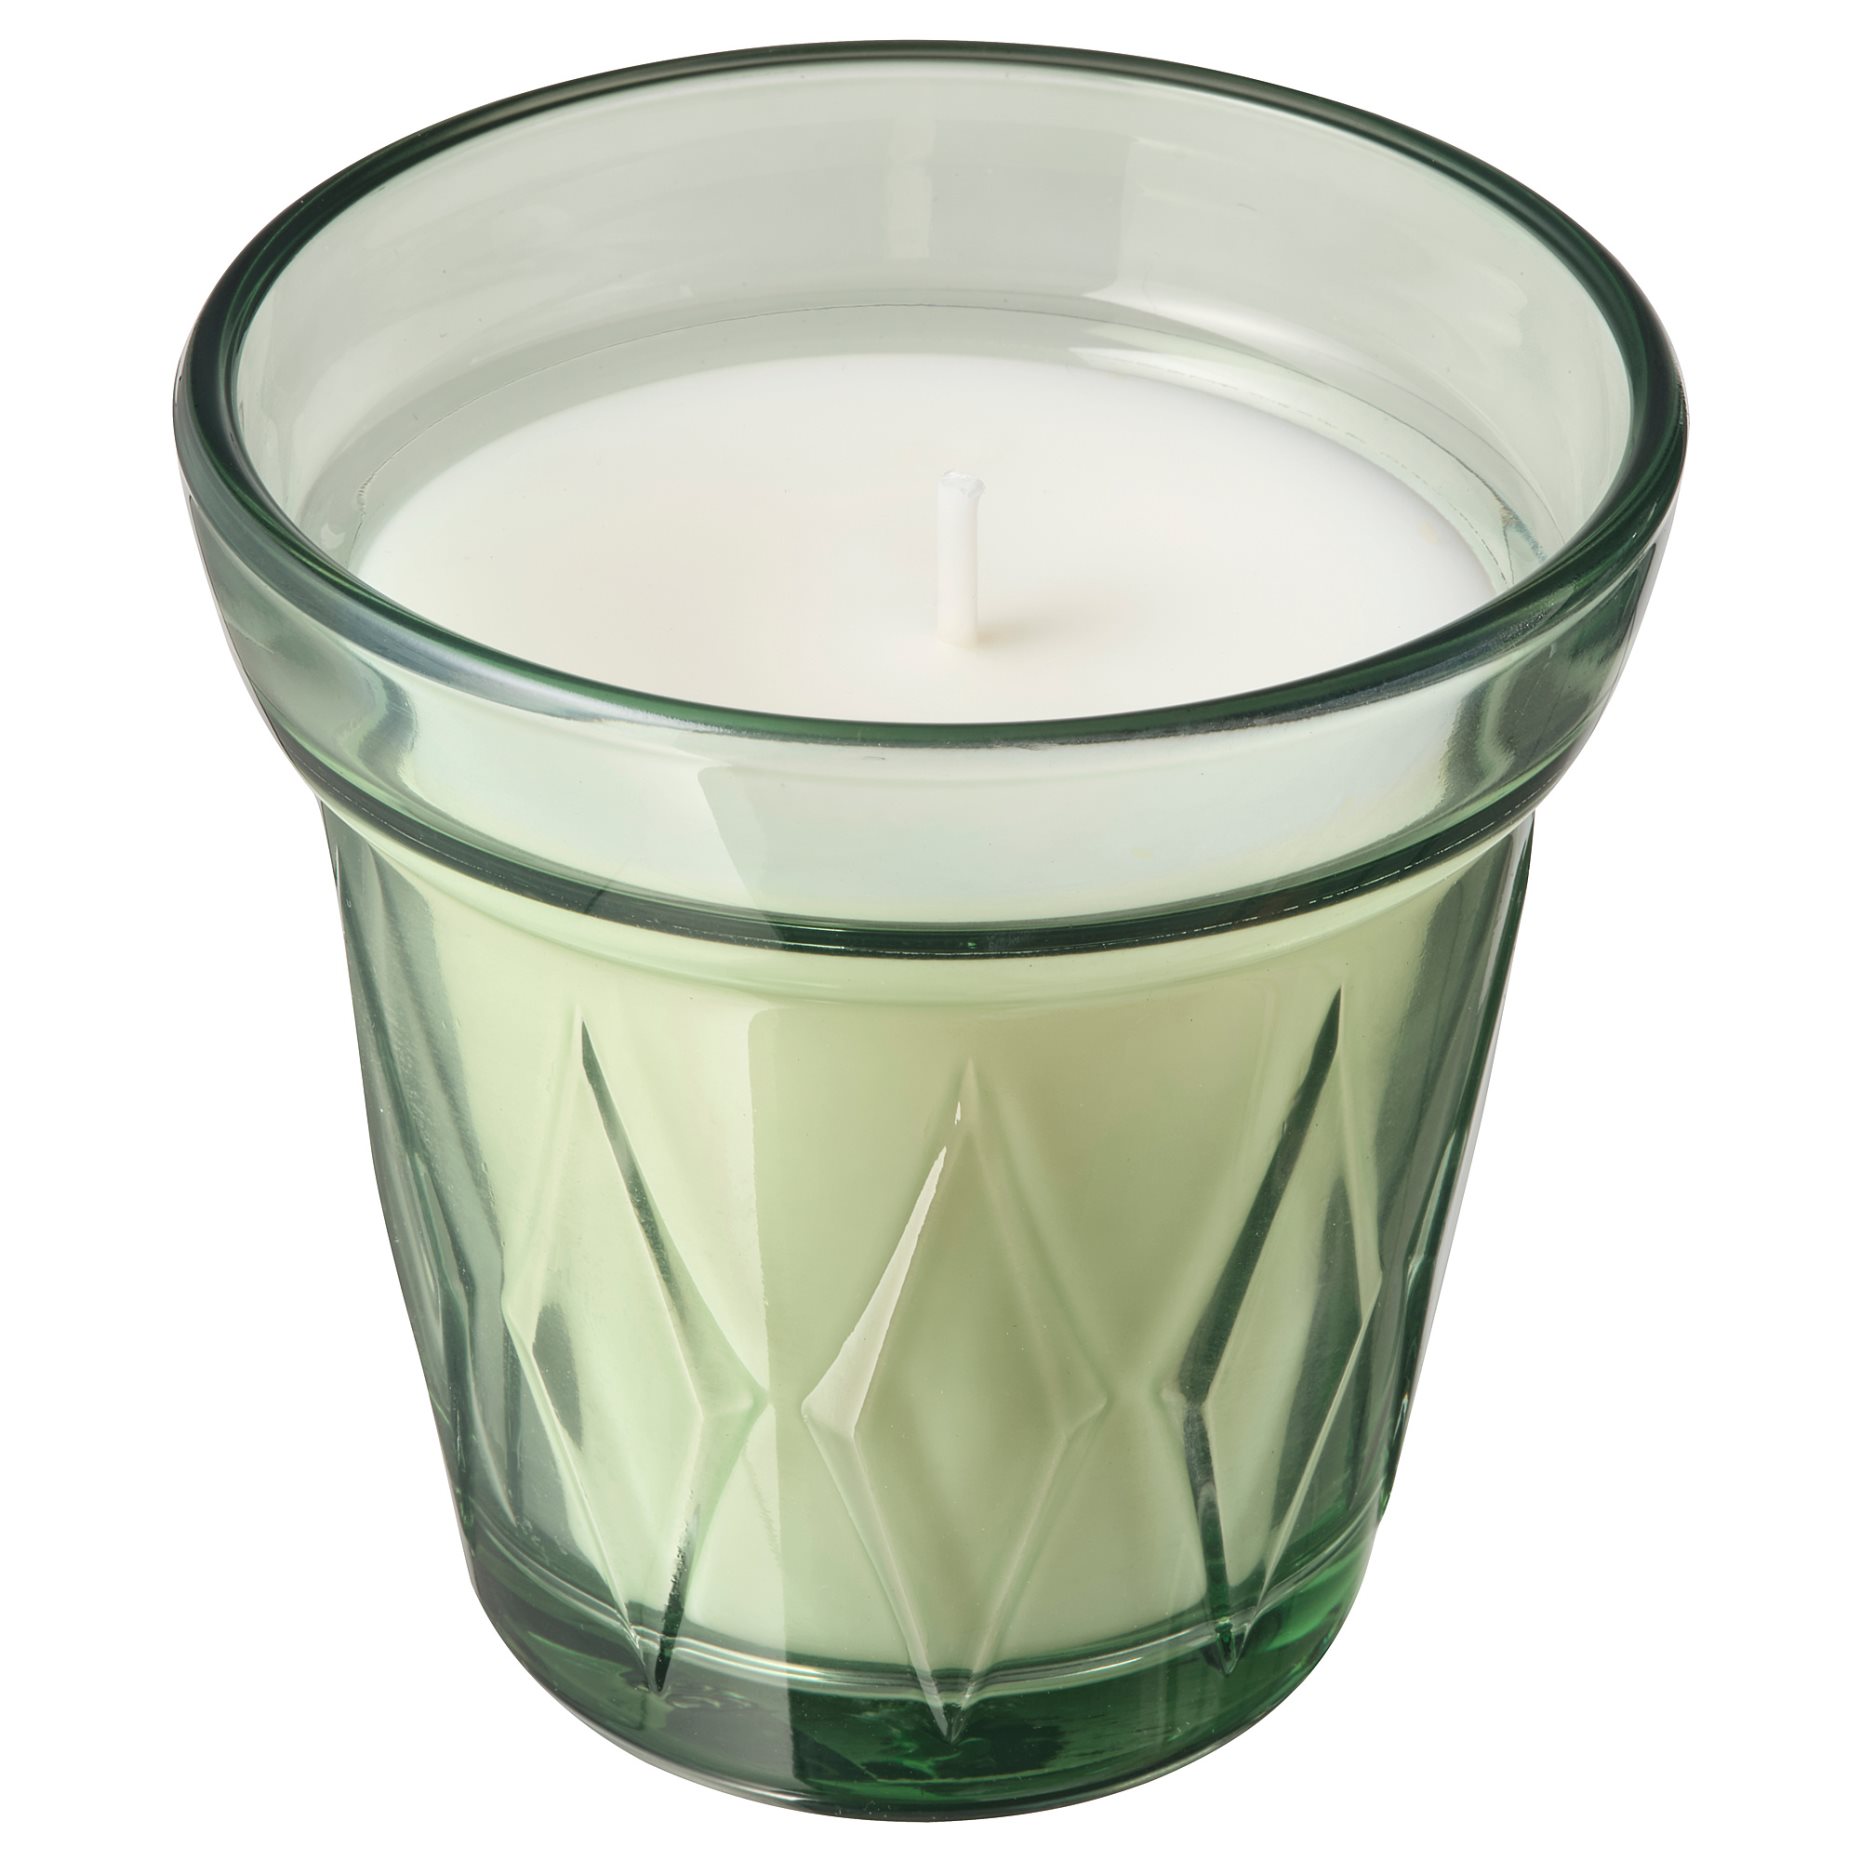 VÄLDOFT, αρωματικό κερί σε ποτήρι, πρωινή δροσιά, 004.422.96